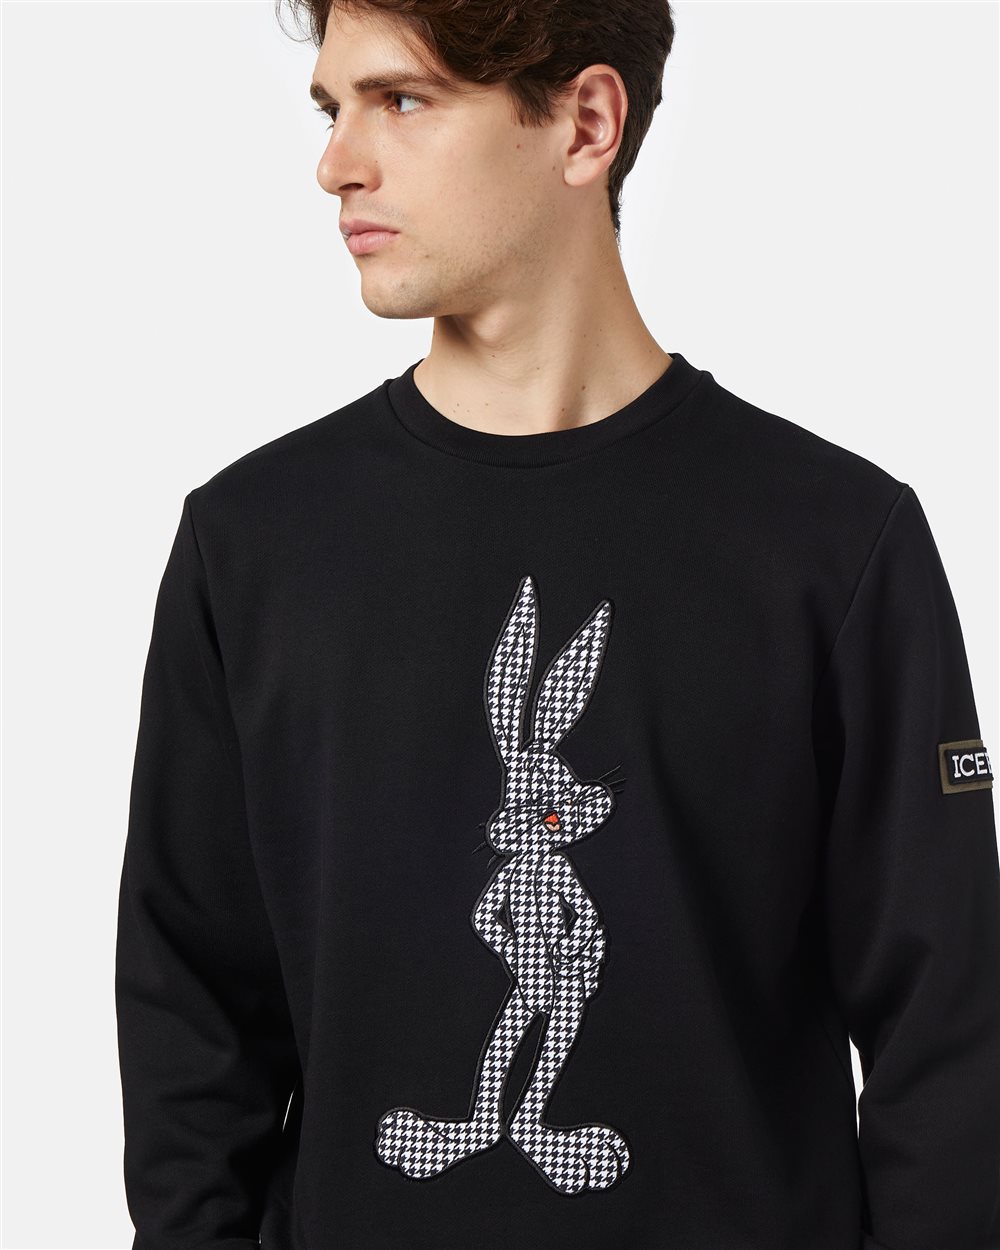 Playboy Bugs Bunny Looney Tunes Shirt, hoodie, sweater, long